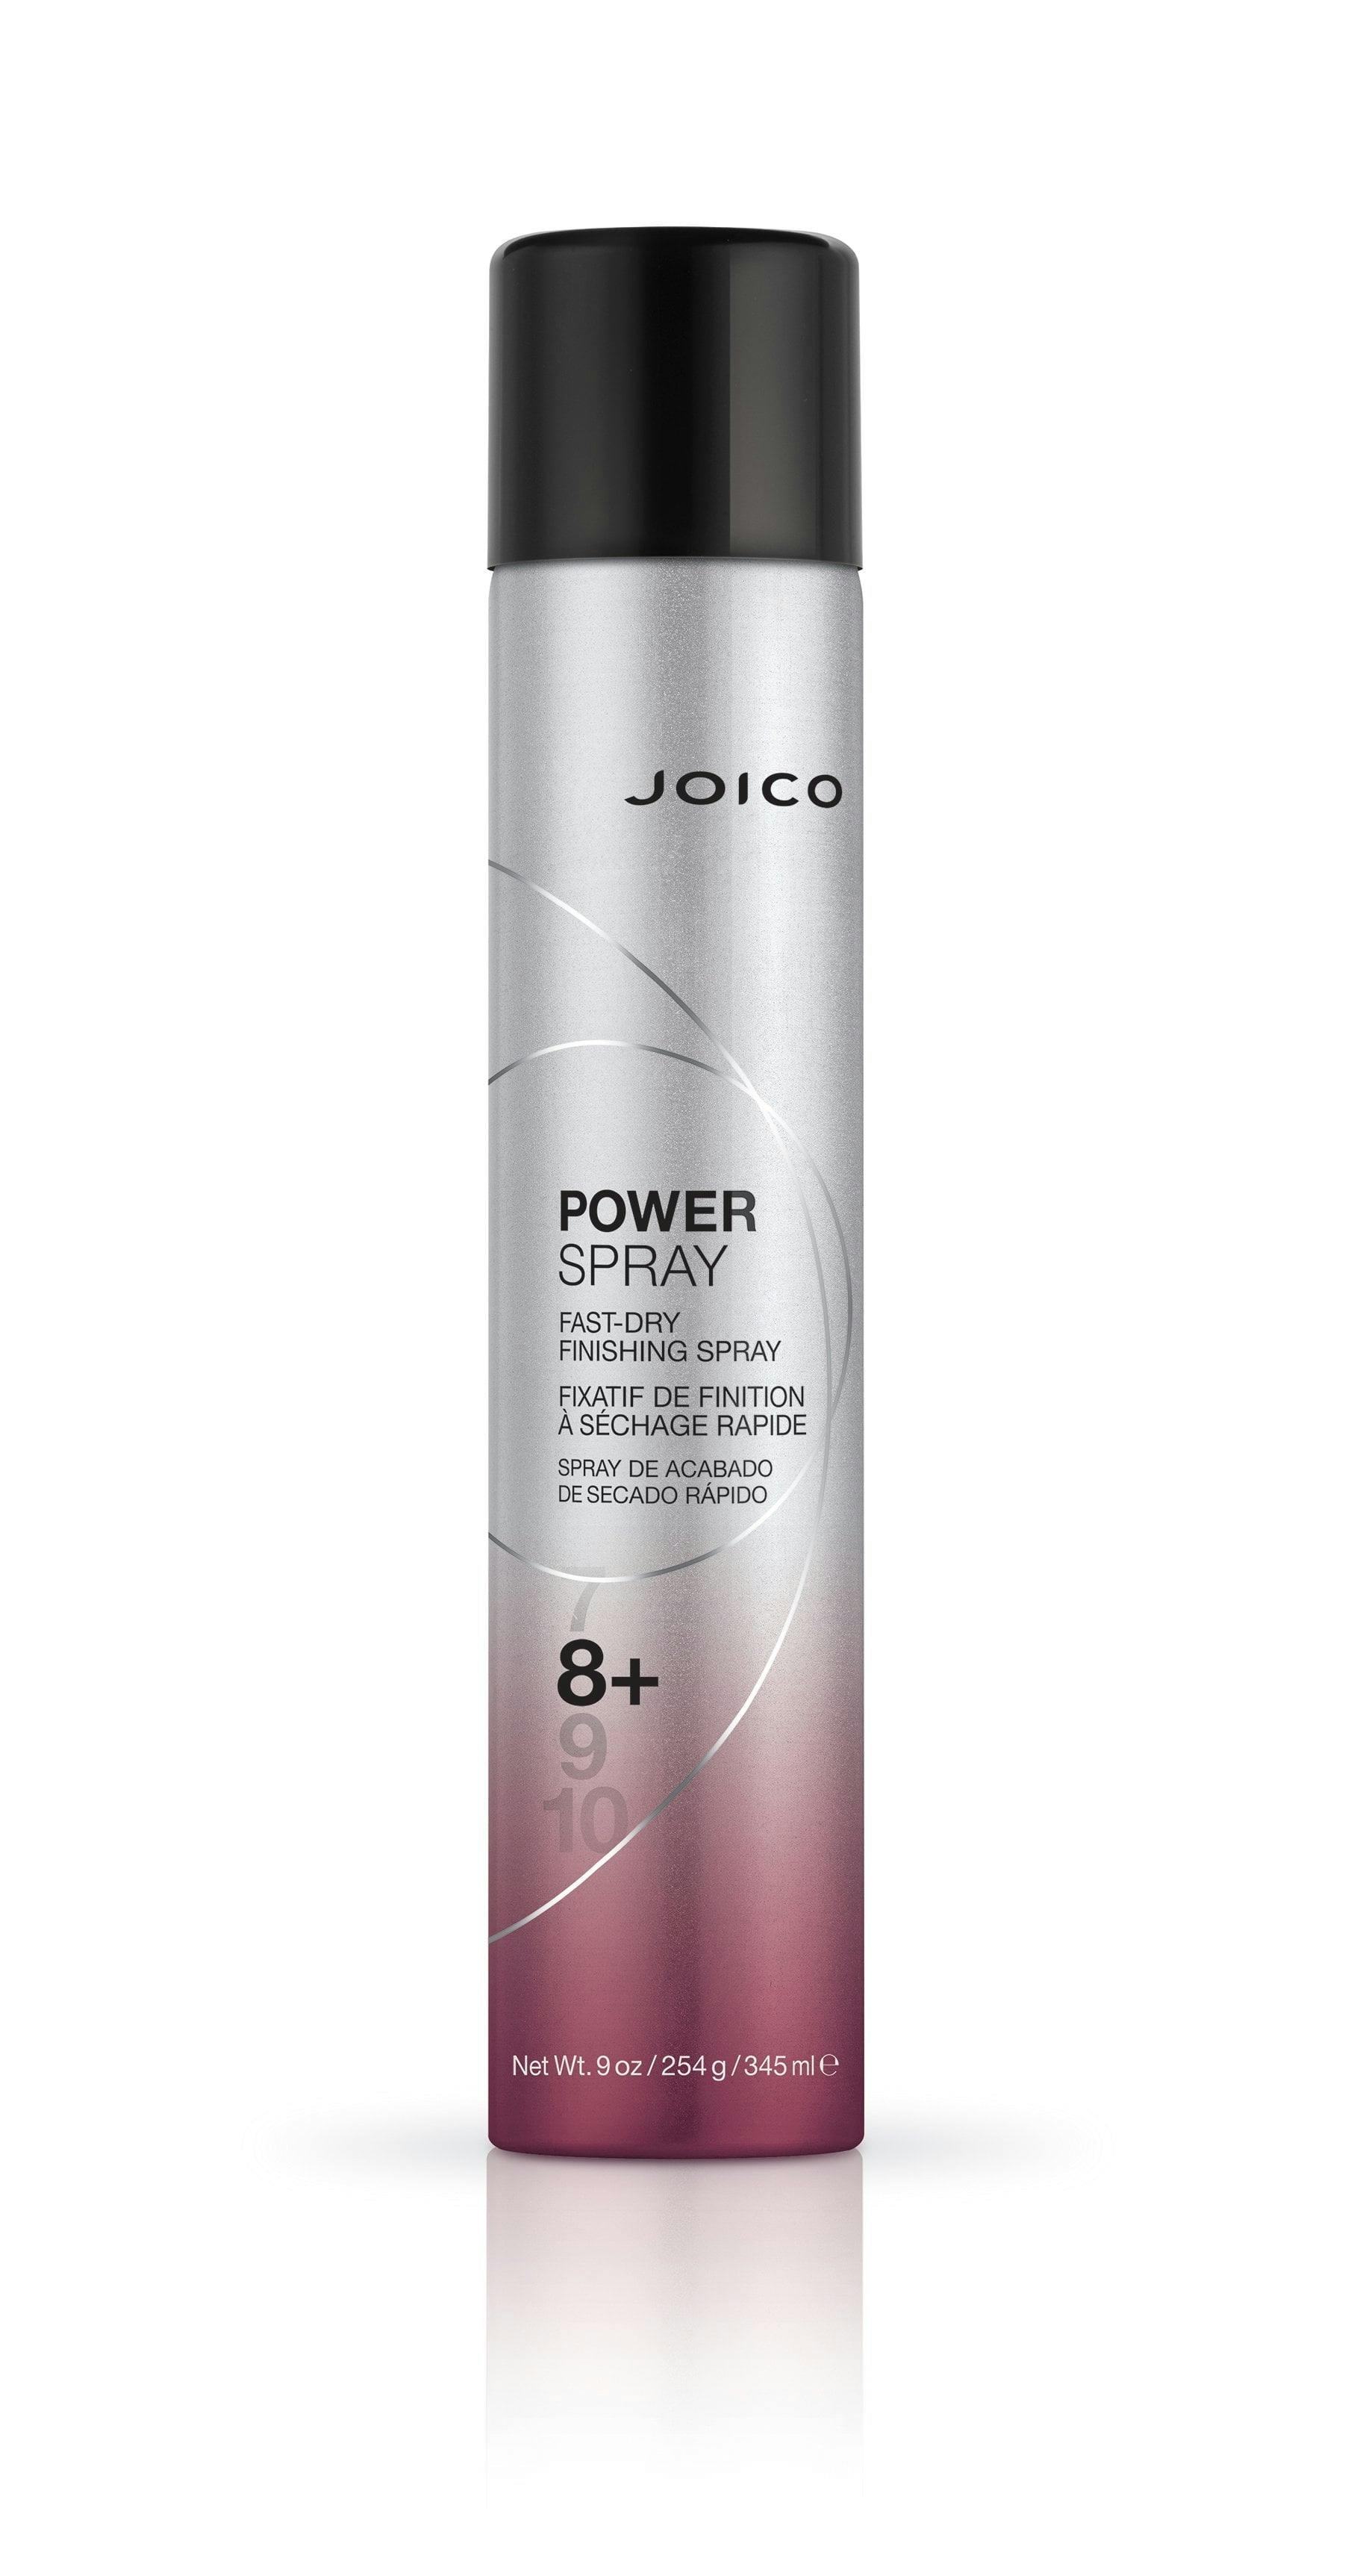 Joico Power Spray Fast Dry Finishing Spray 300ml